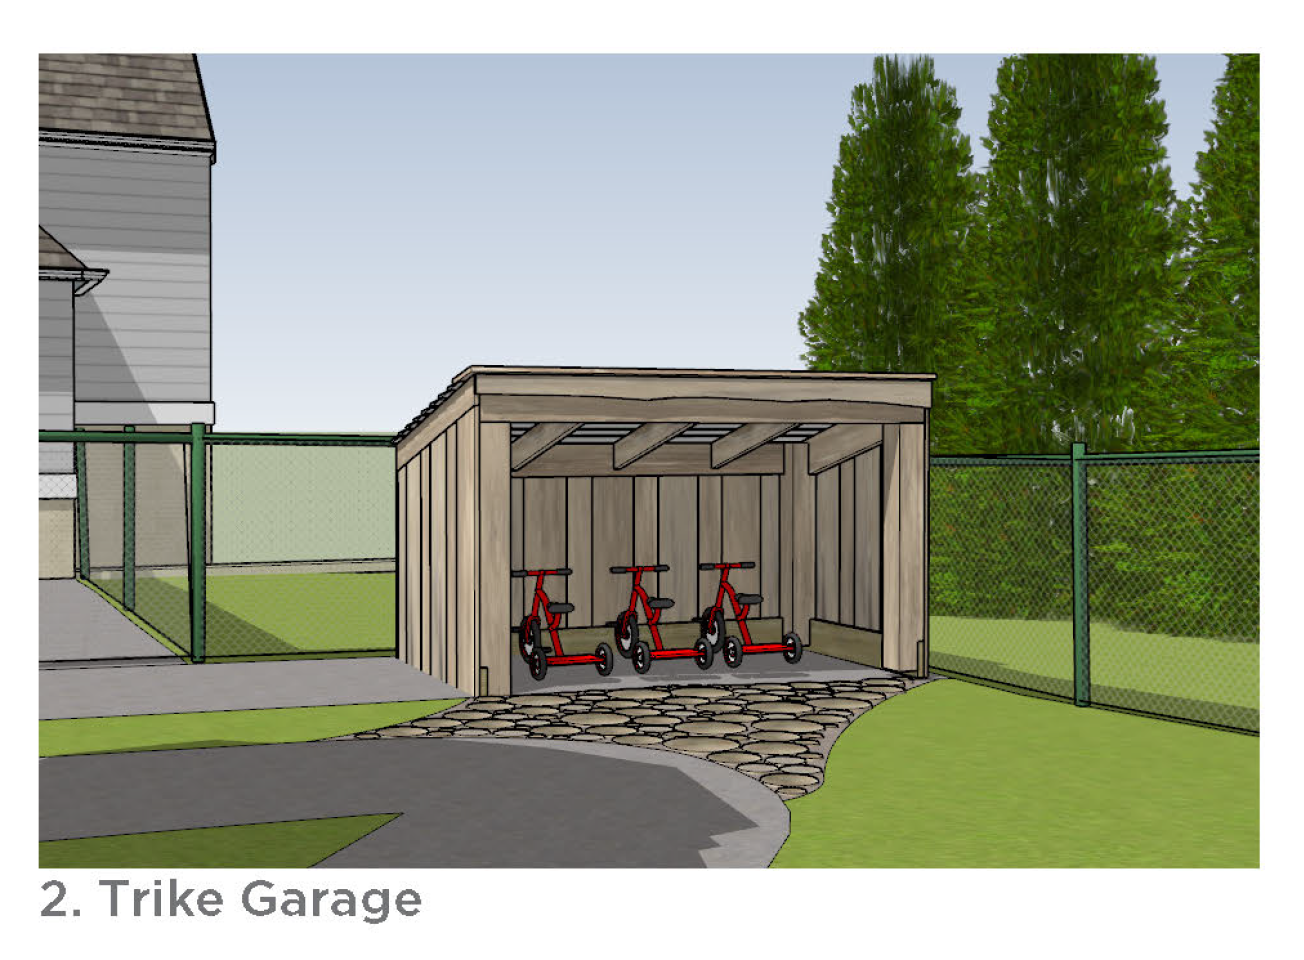 Photo of the trike garage.